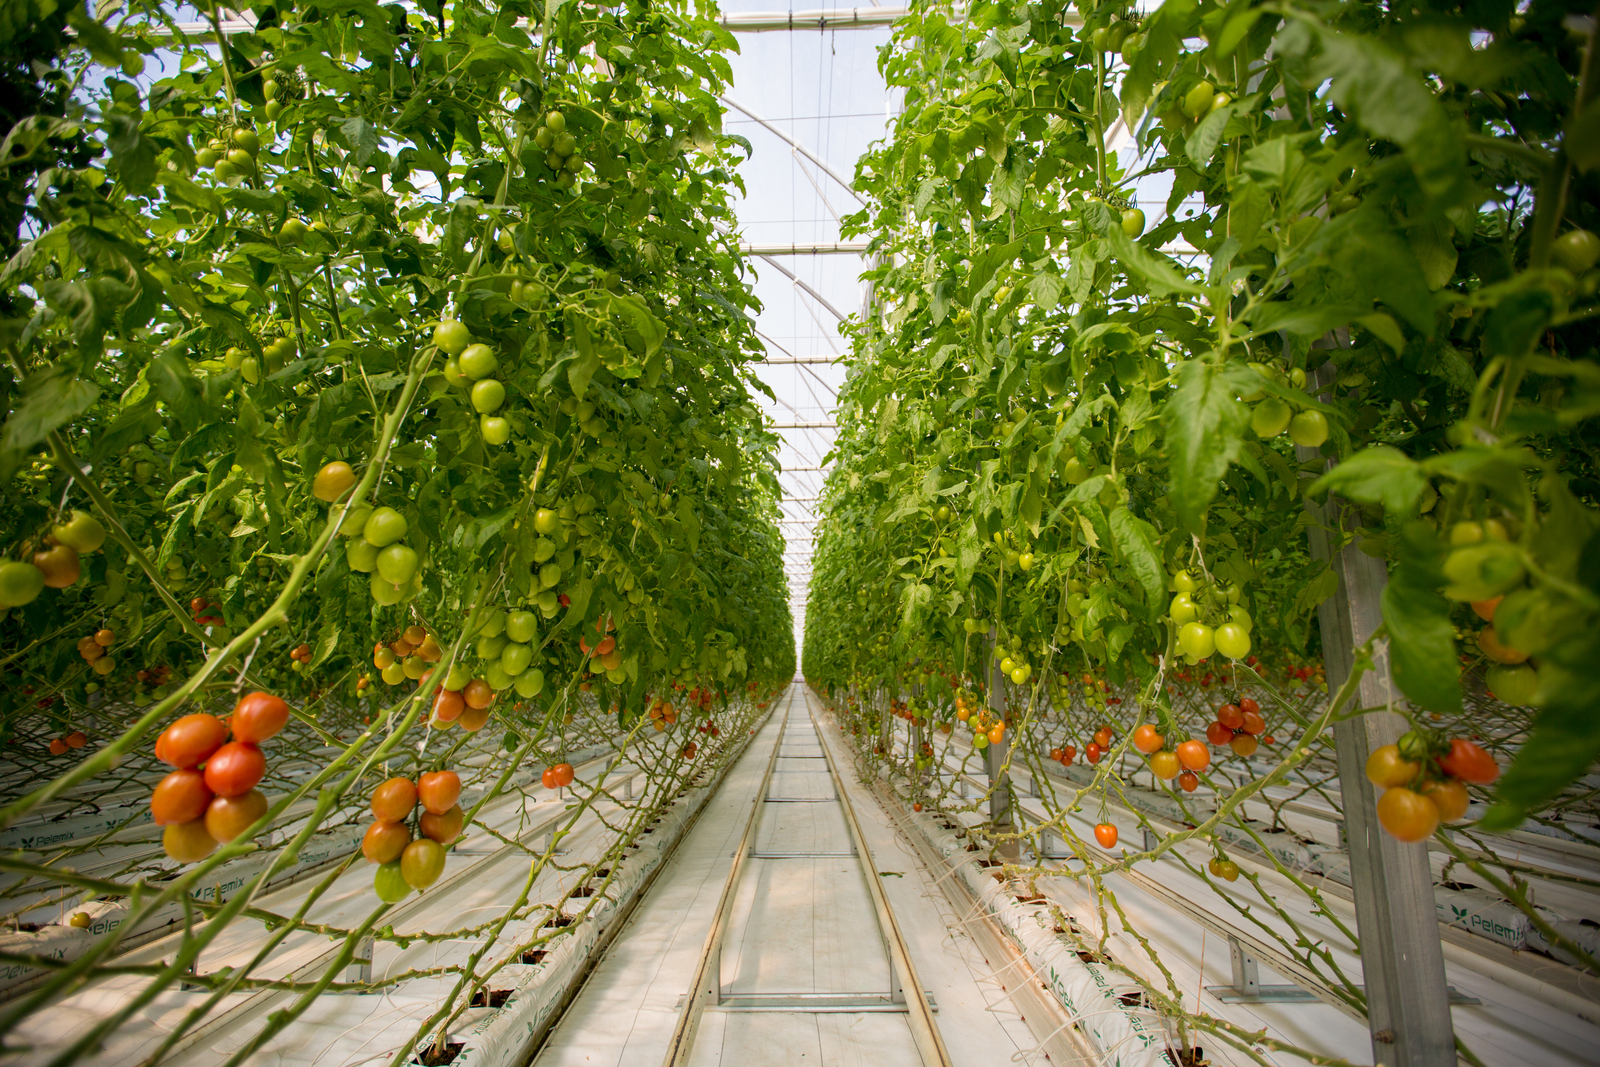 High-yield tomato farming